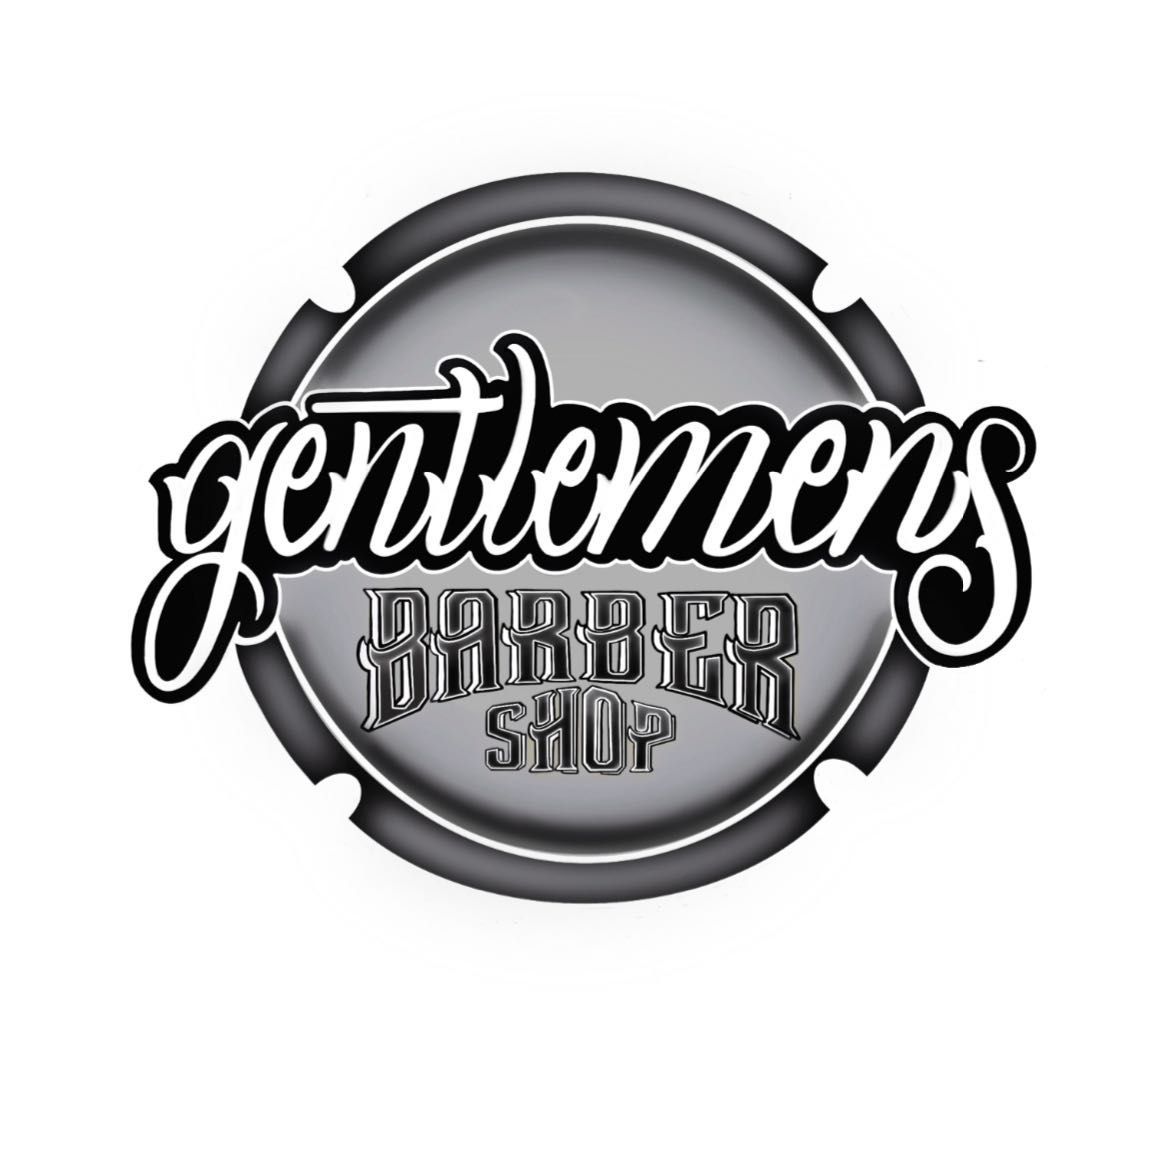 Gentlemen's barbershop dfw, 132 E Main St, Suit 100, Grand Prairie, 75050